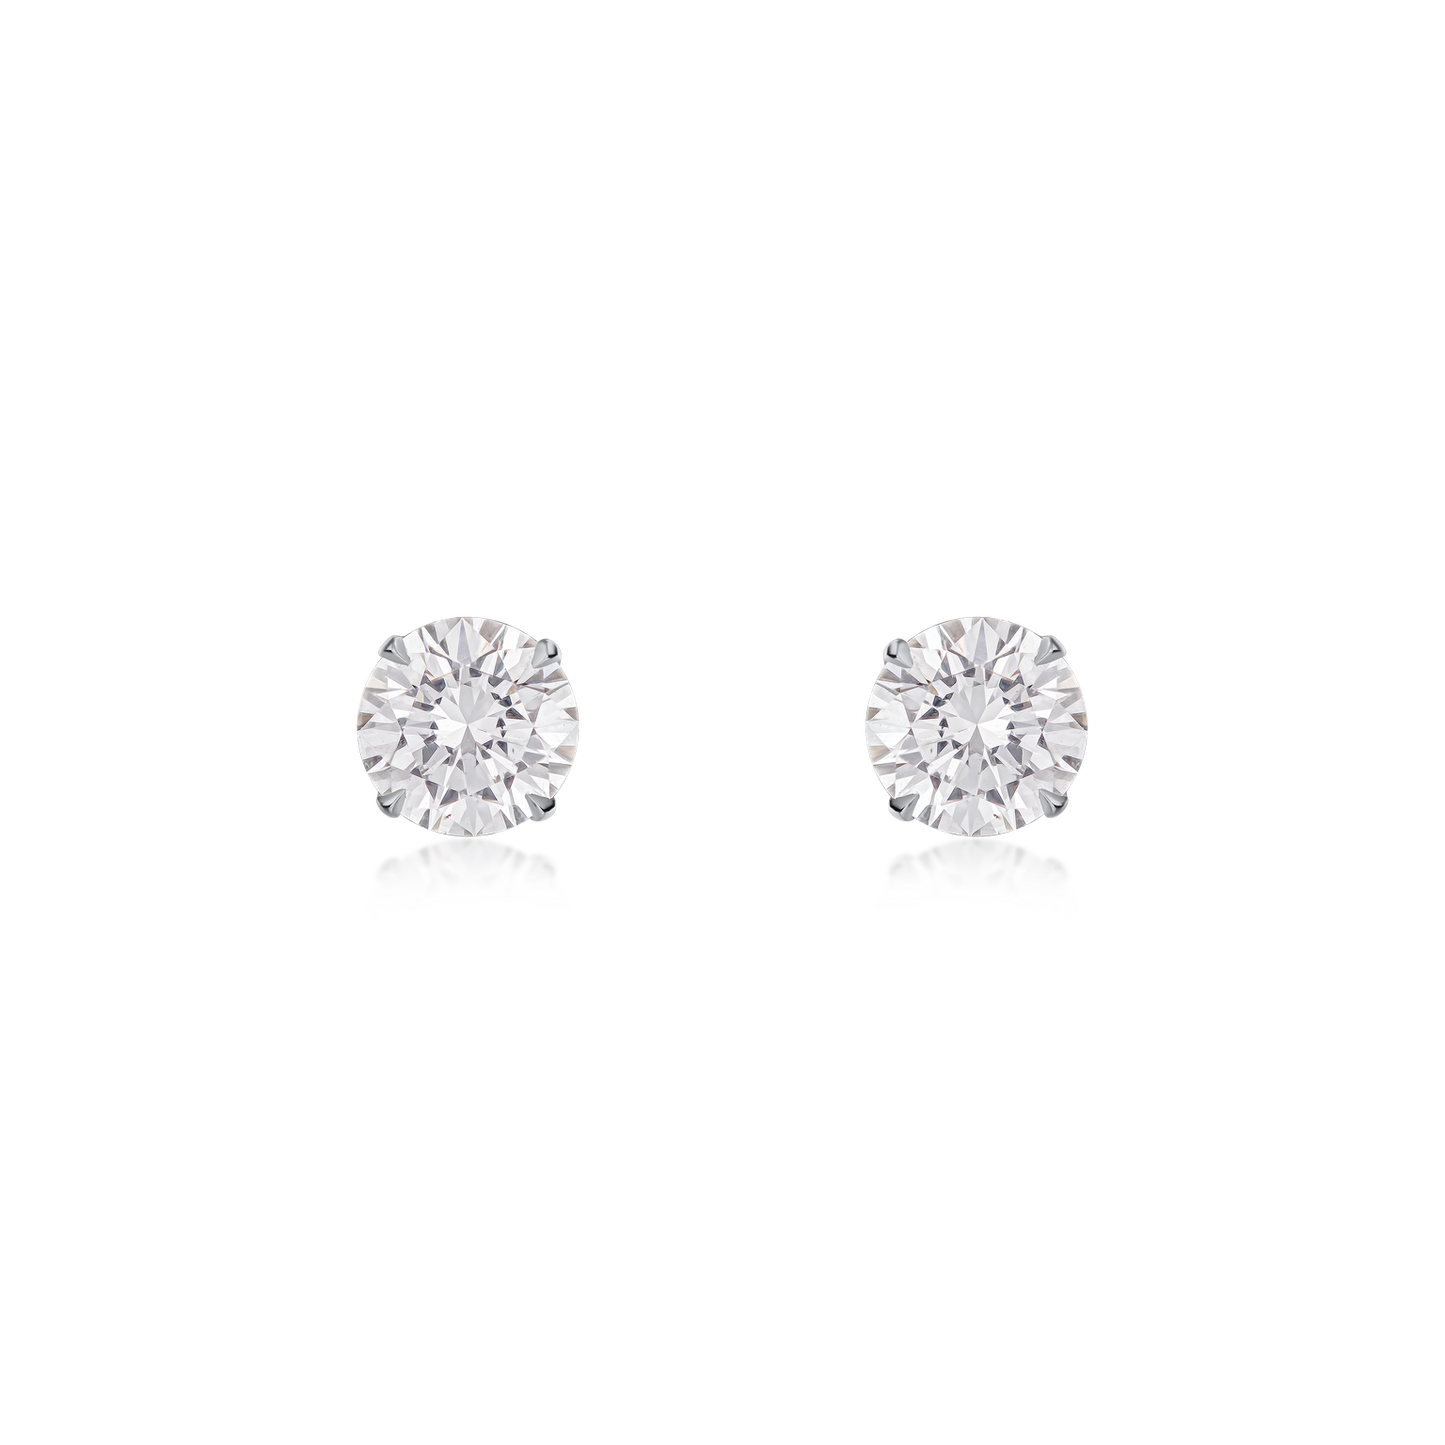 Sienna Slide On/Off Earrings with Diamond Studs